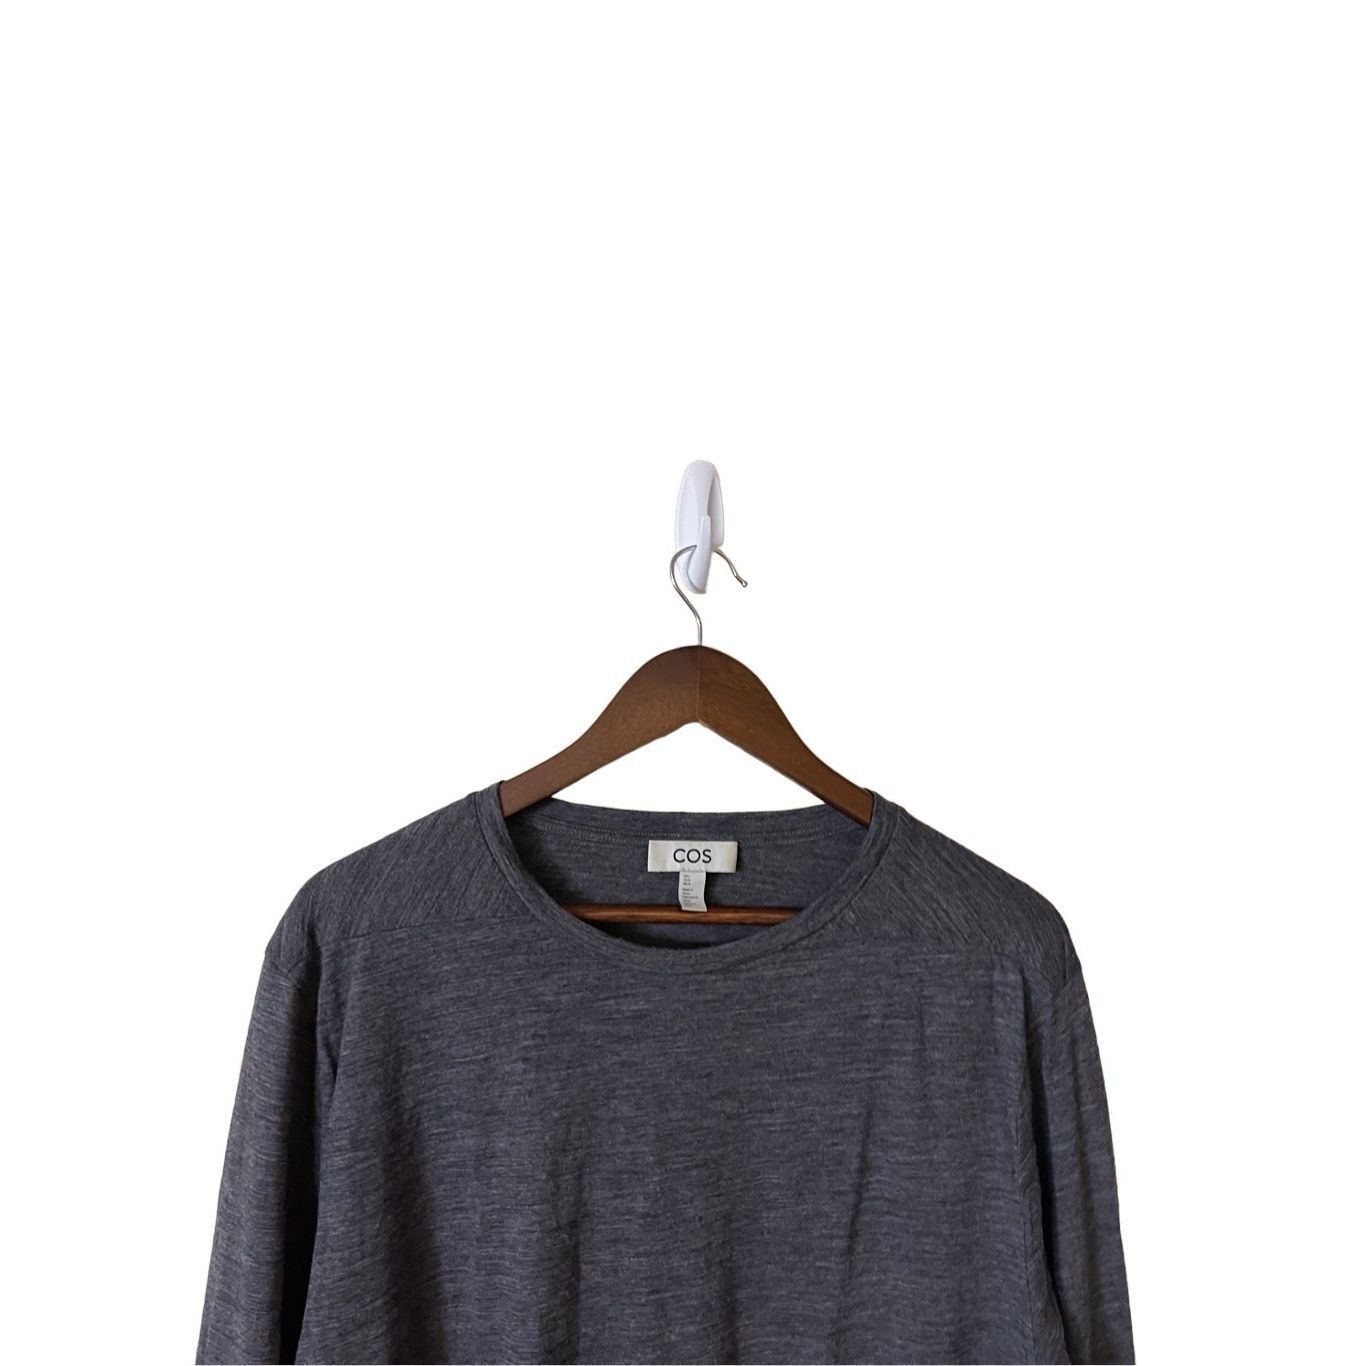 Cos COS 100% Wool Grey Crewneck Long Sleeve Lightweight Sweater Size US L / EU 52-54 / 3 - 8 Thumbnail